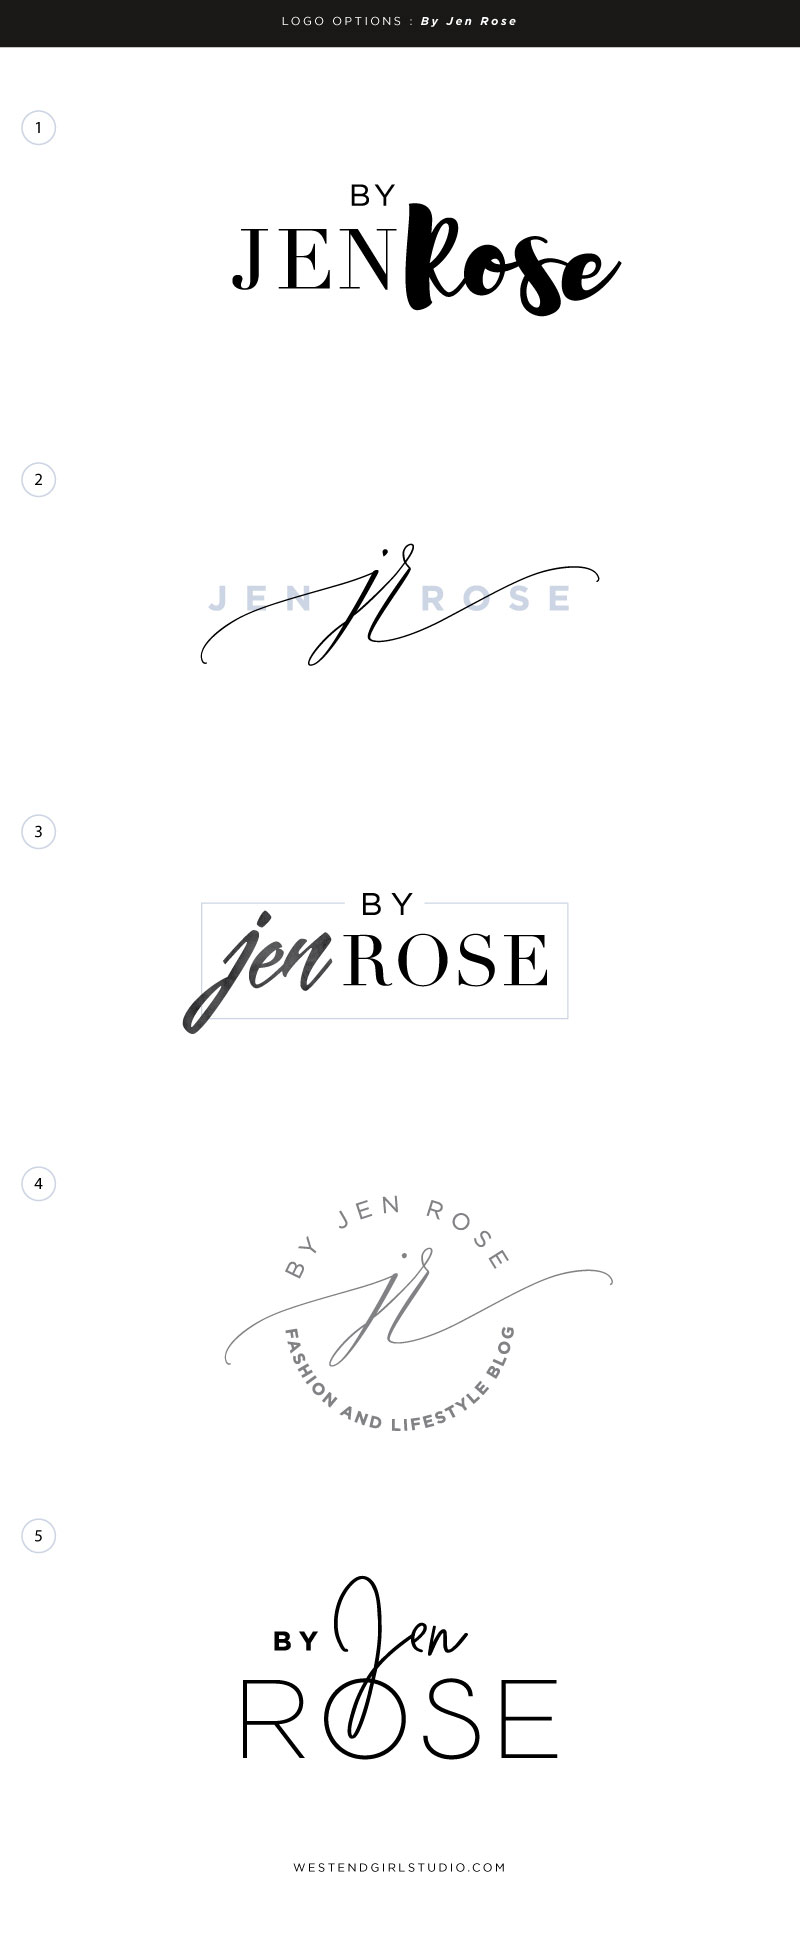 jen-rose-options